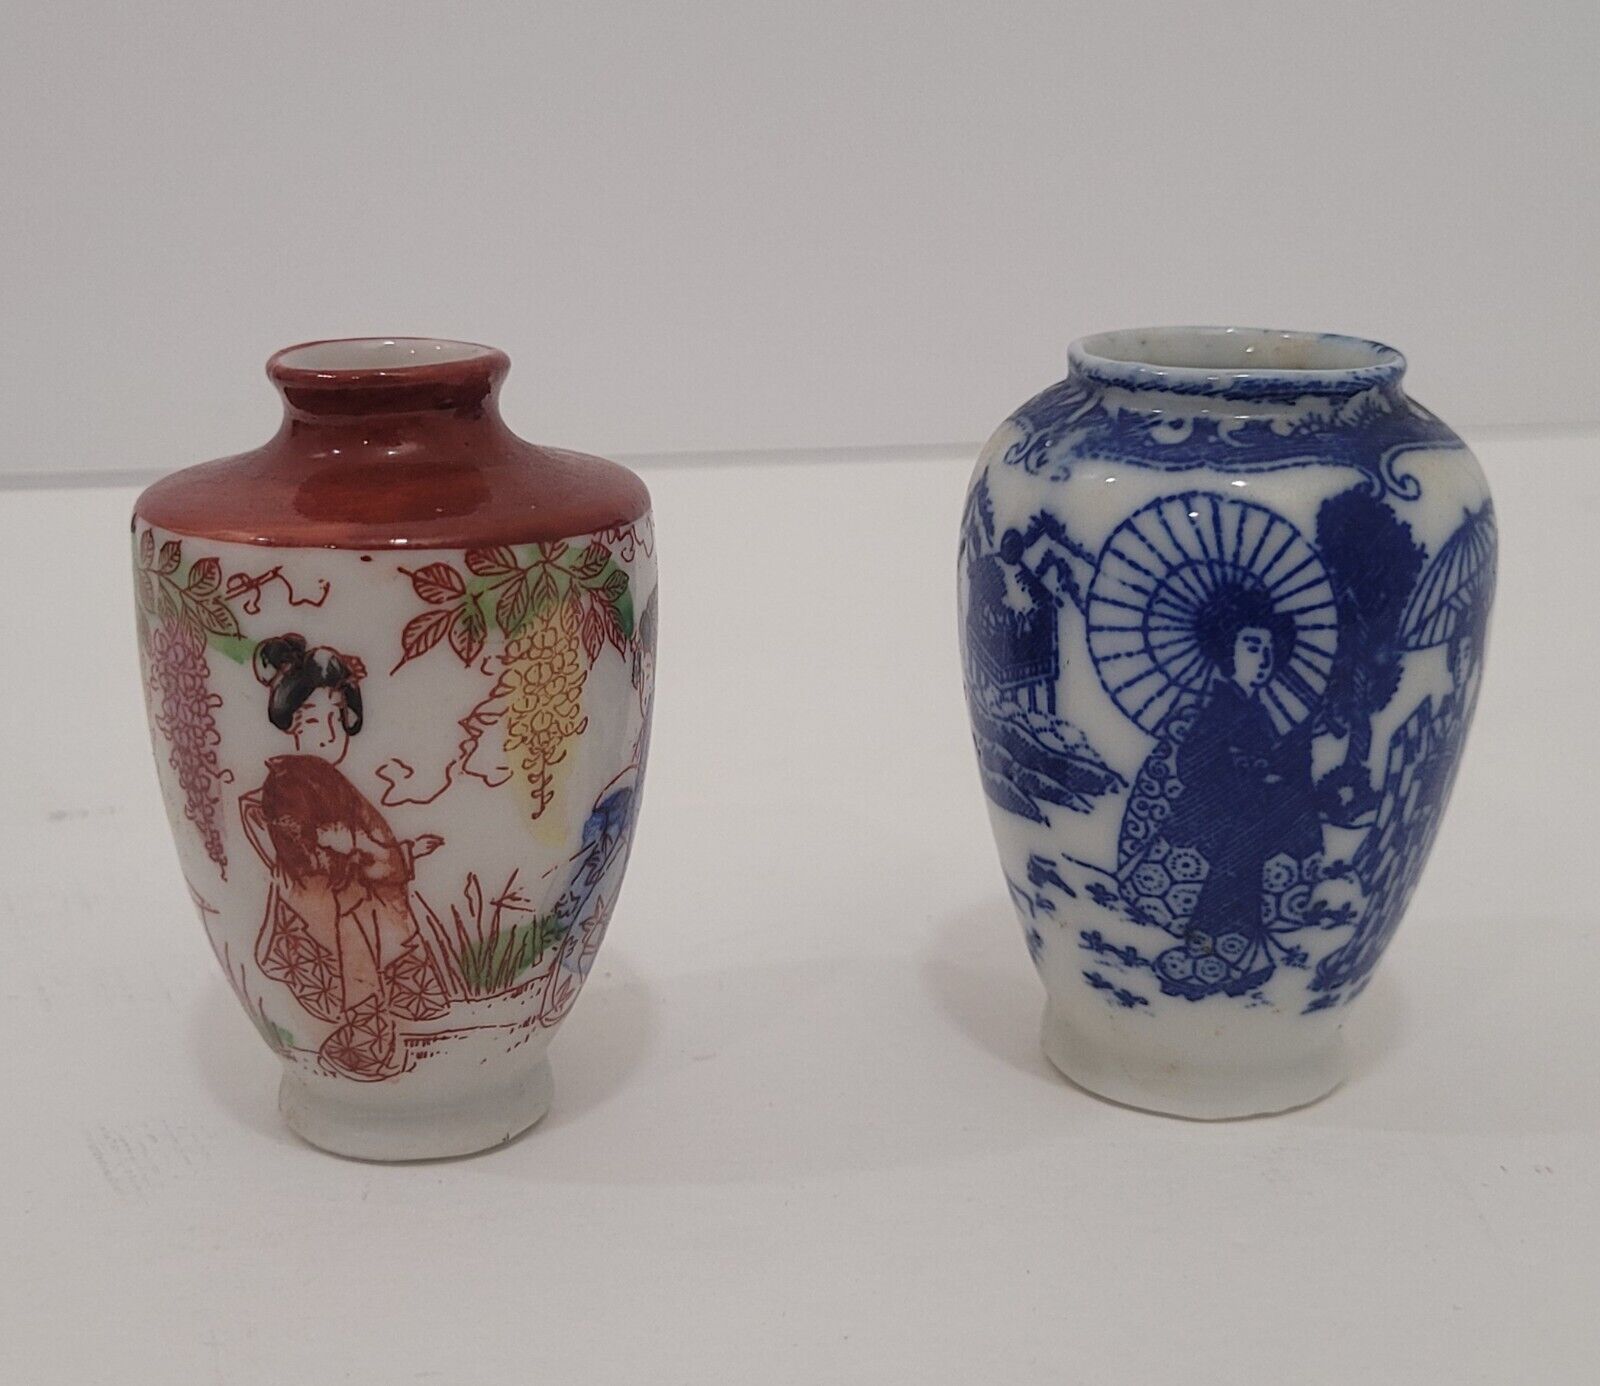 Two Vintage Asian Oriental Mini Vases Porcelain Geisha Scene  Japan 2.5